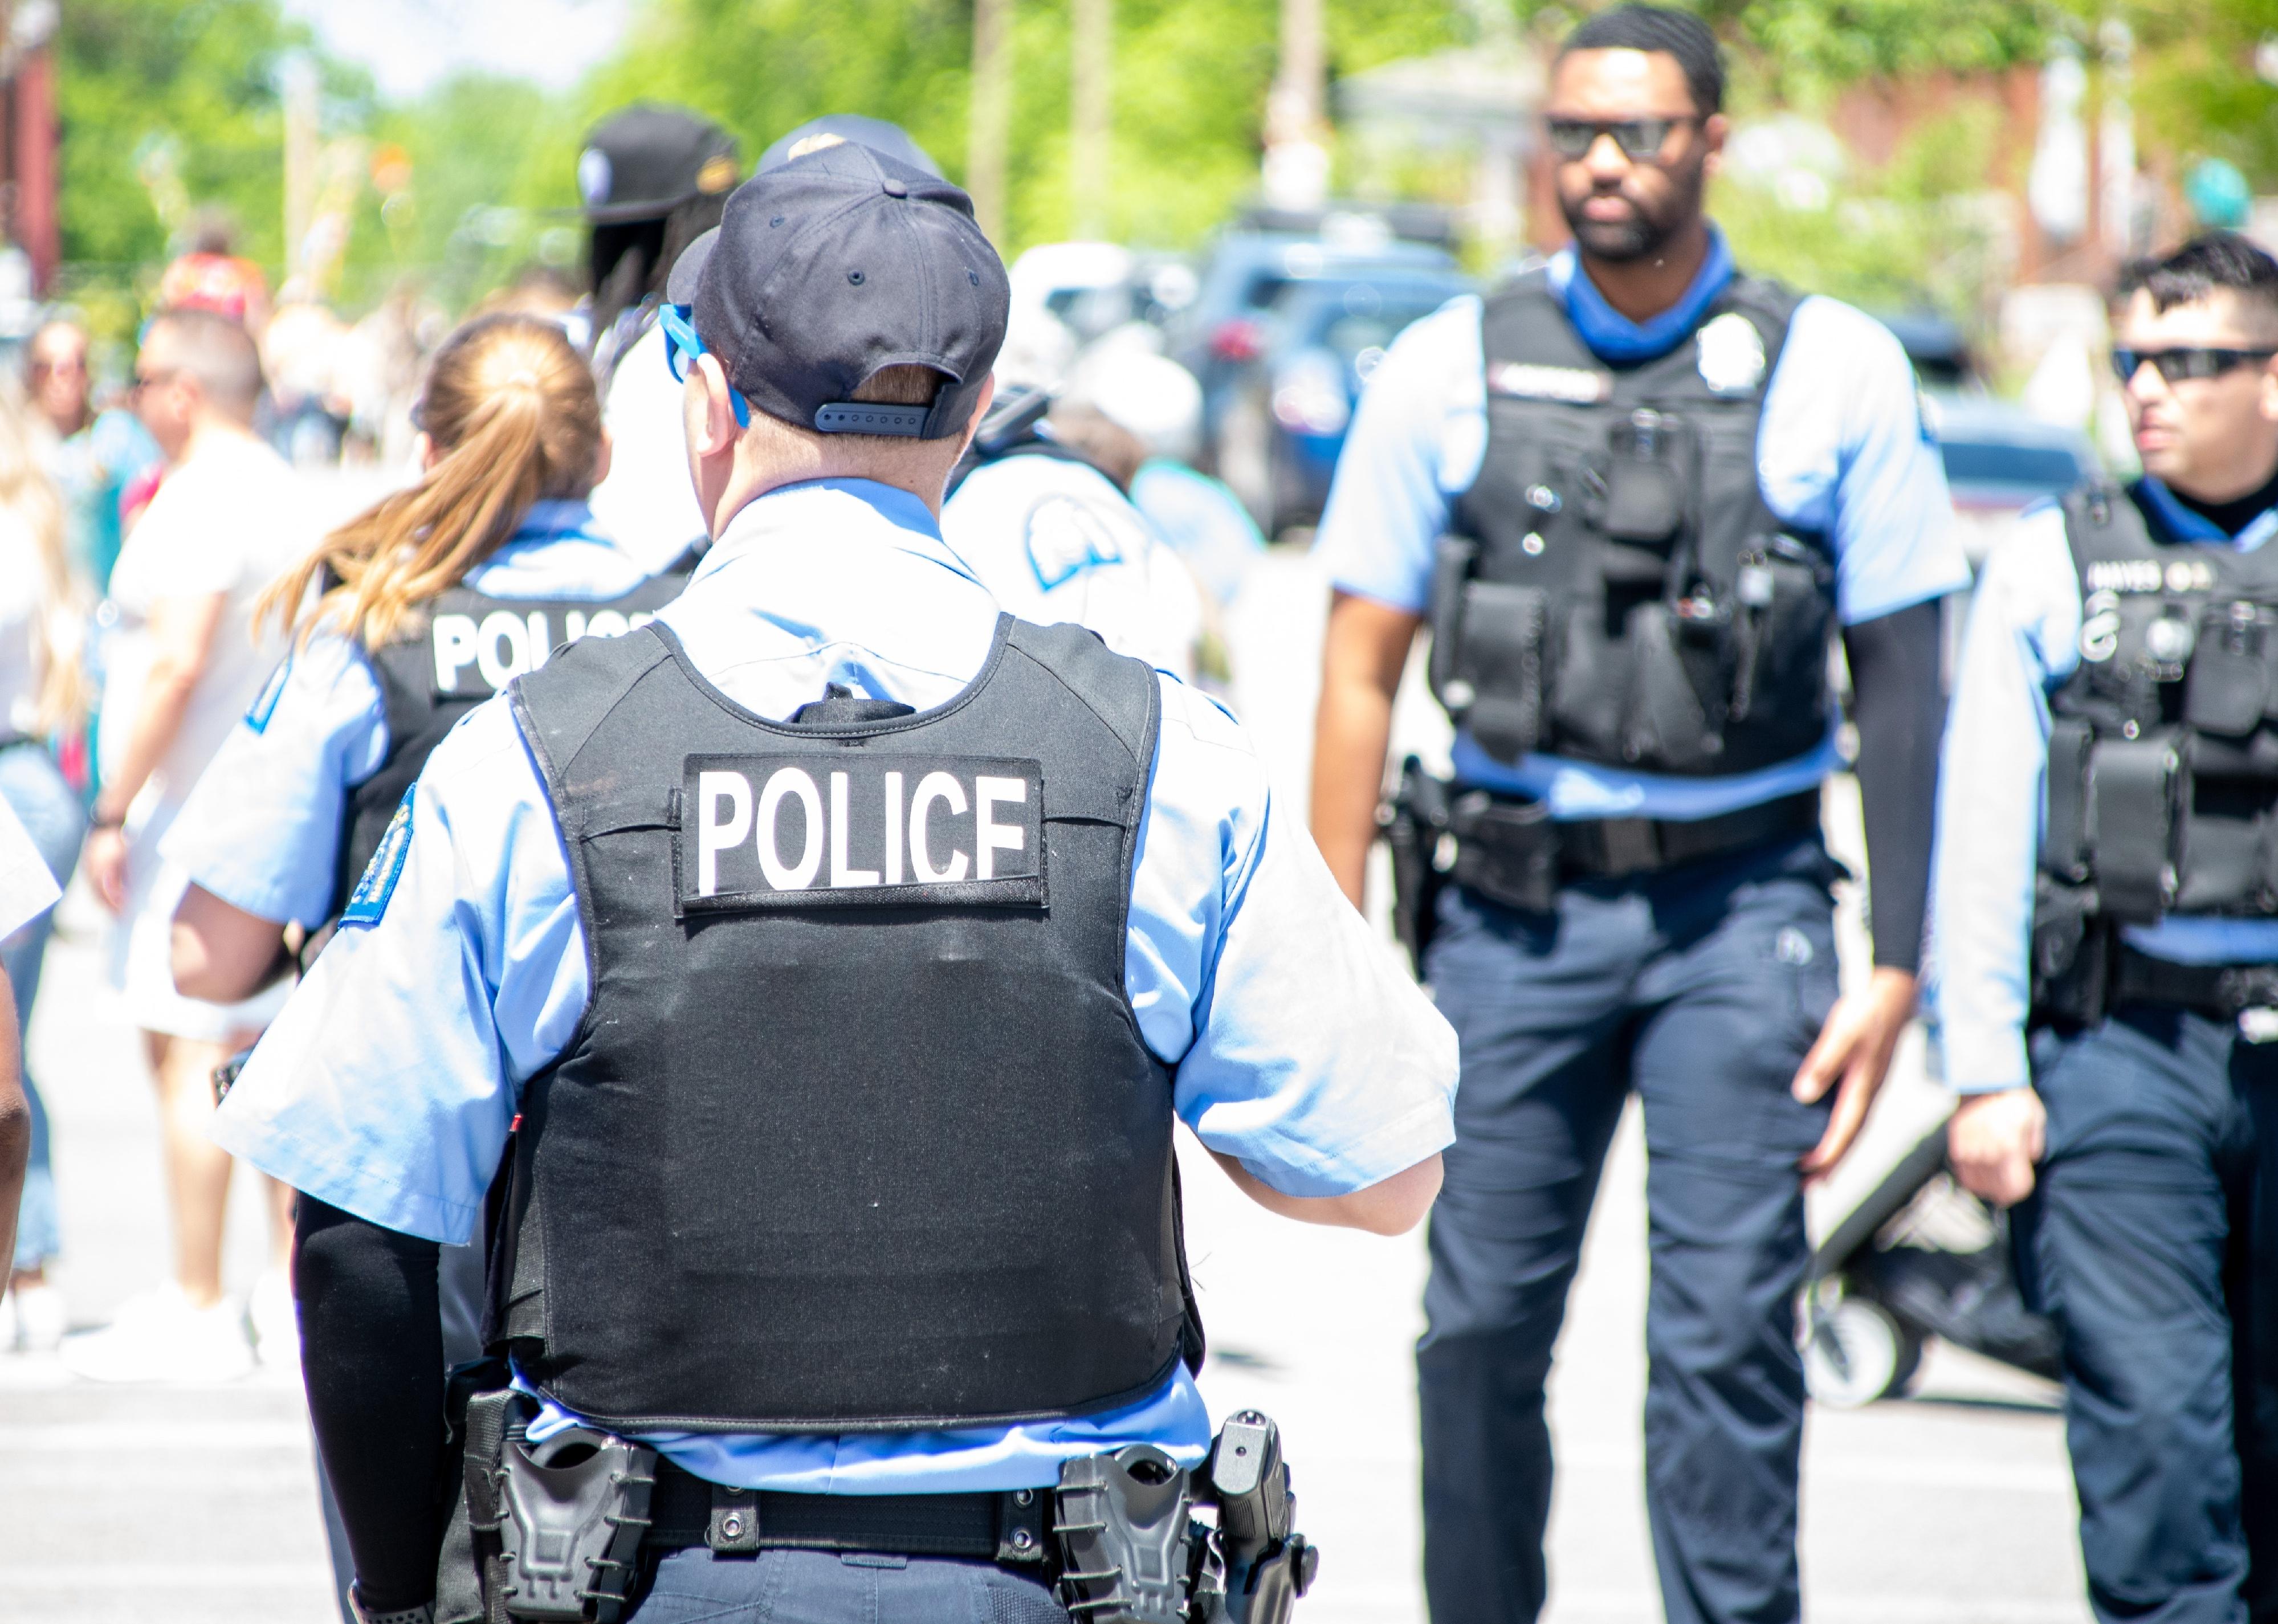 A St. Louis Metropolitan Police Department officer wearing a bulletproof vest.